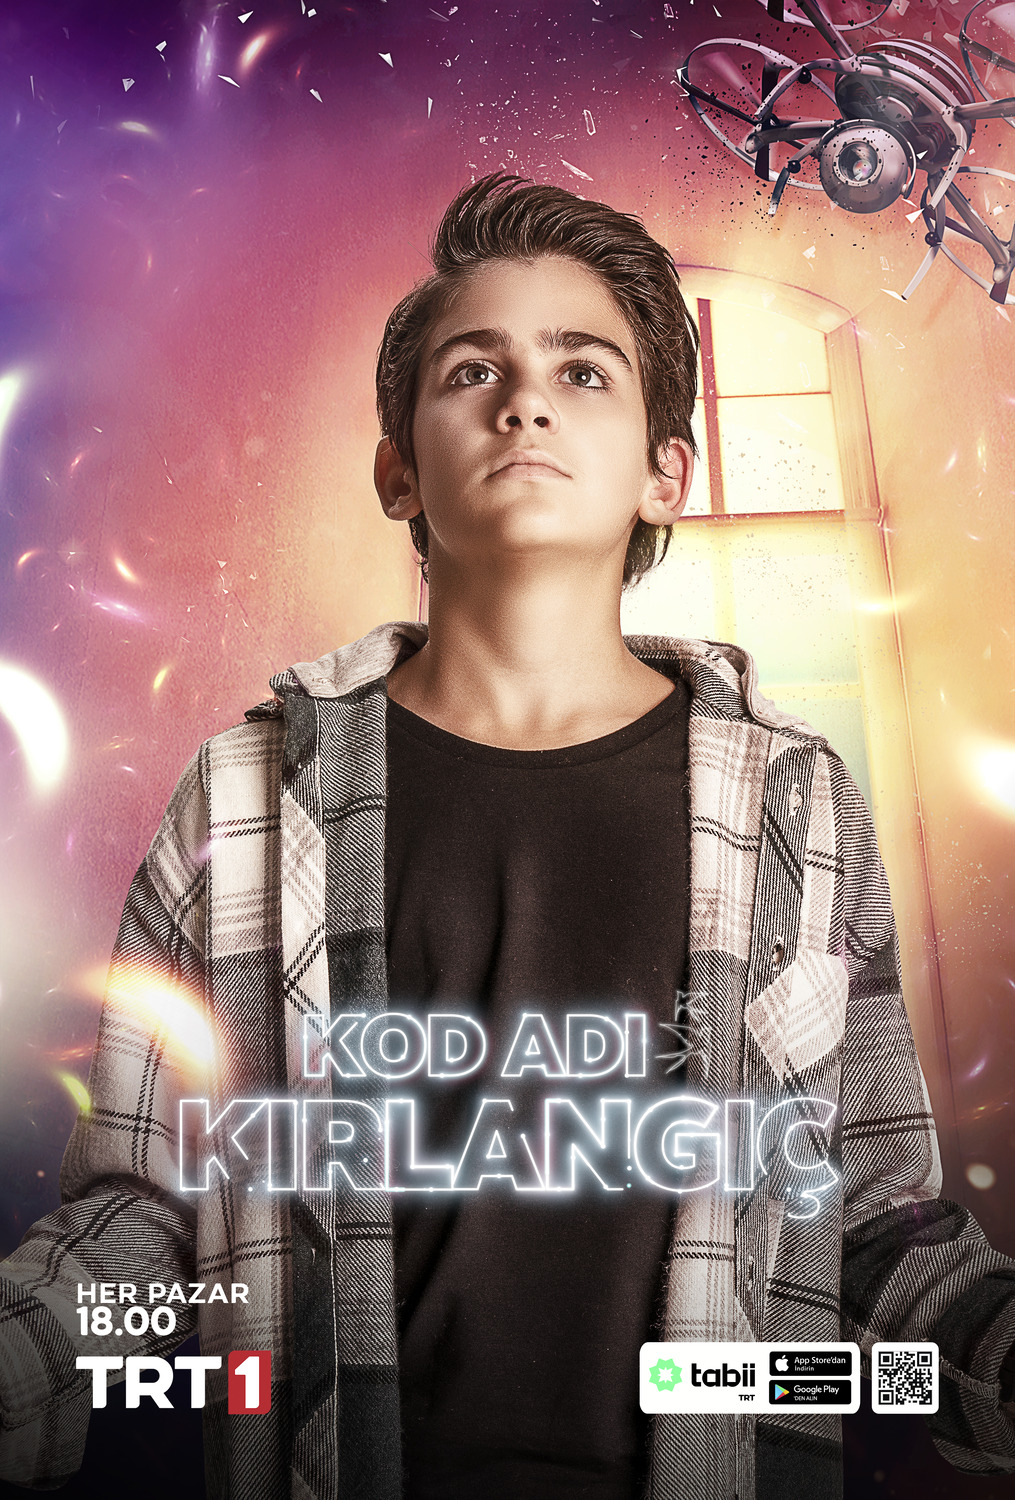 Extra Large TV Poster Image for Kod Adı Kırlangıç (#8 of 12)